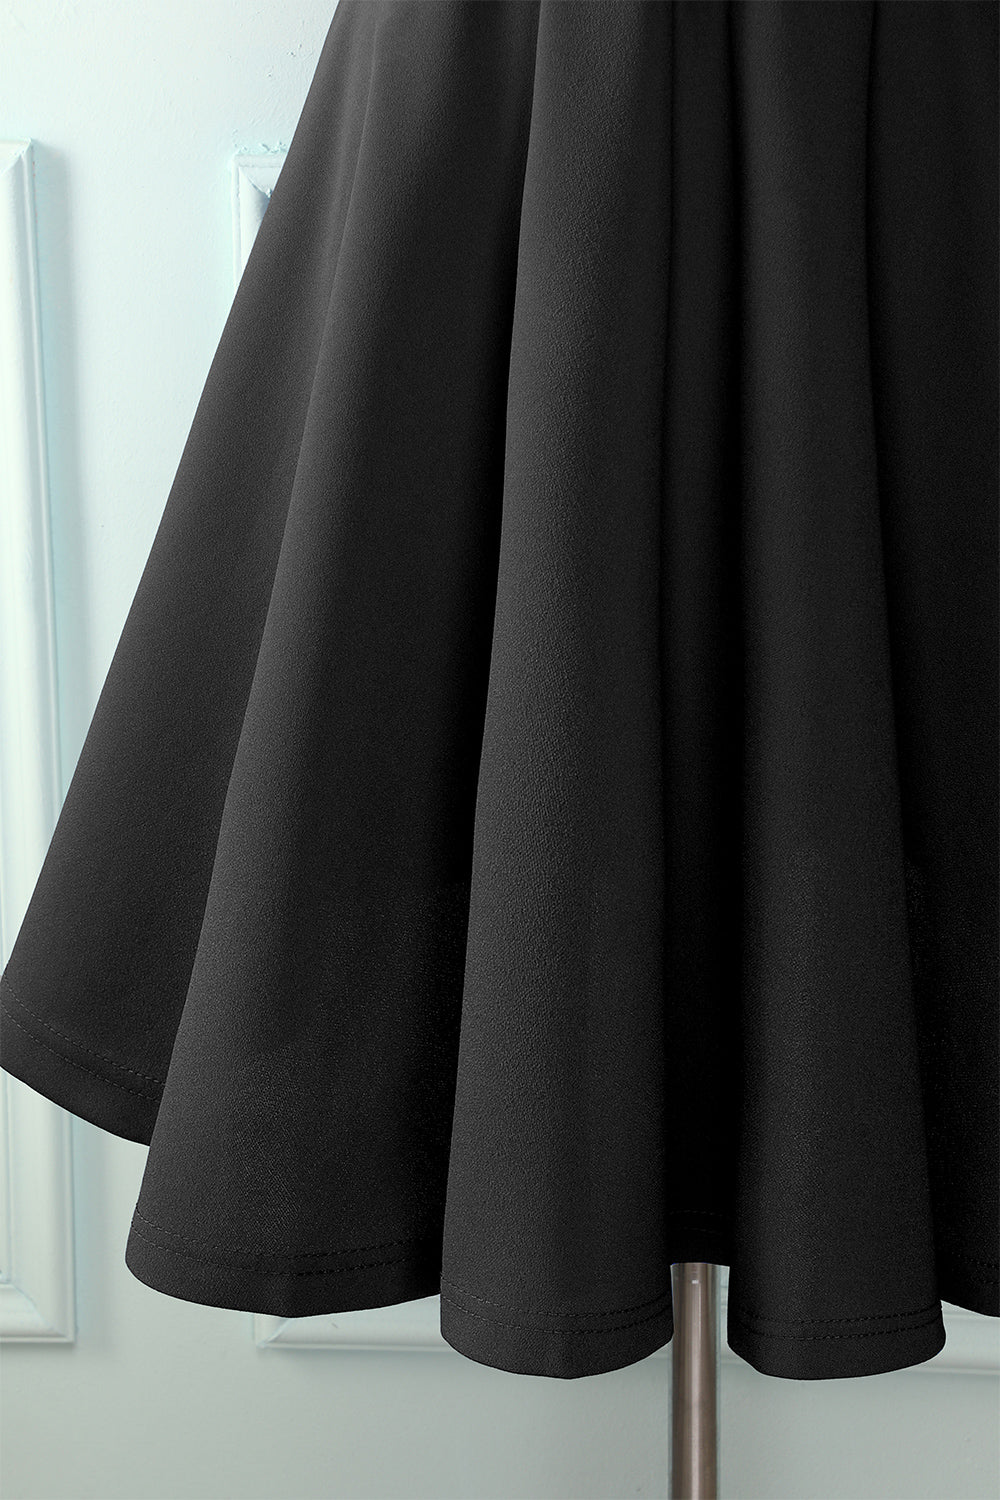 Black Solid Dress